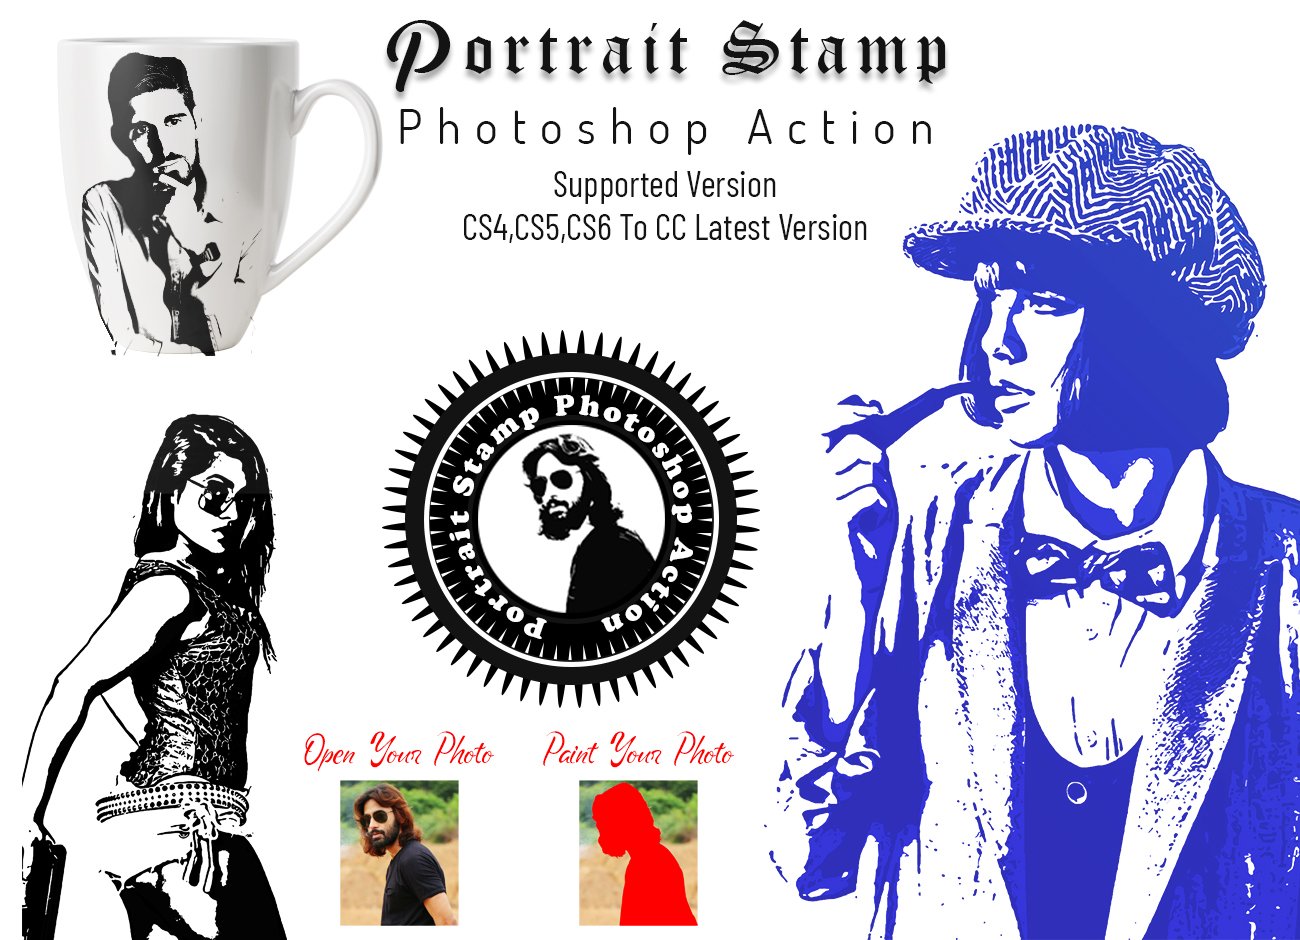 Portrait Stamp Photoshop Actioncover image.